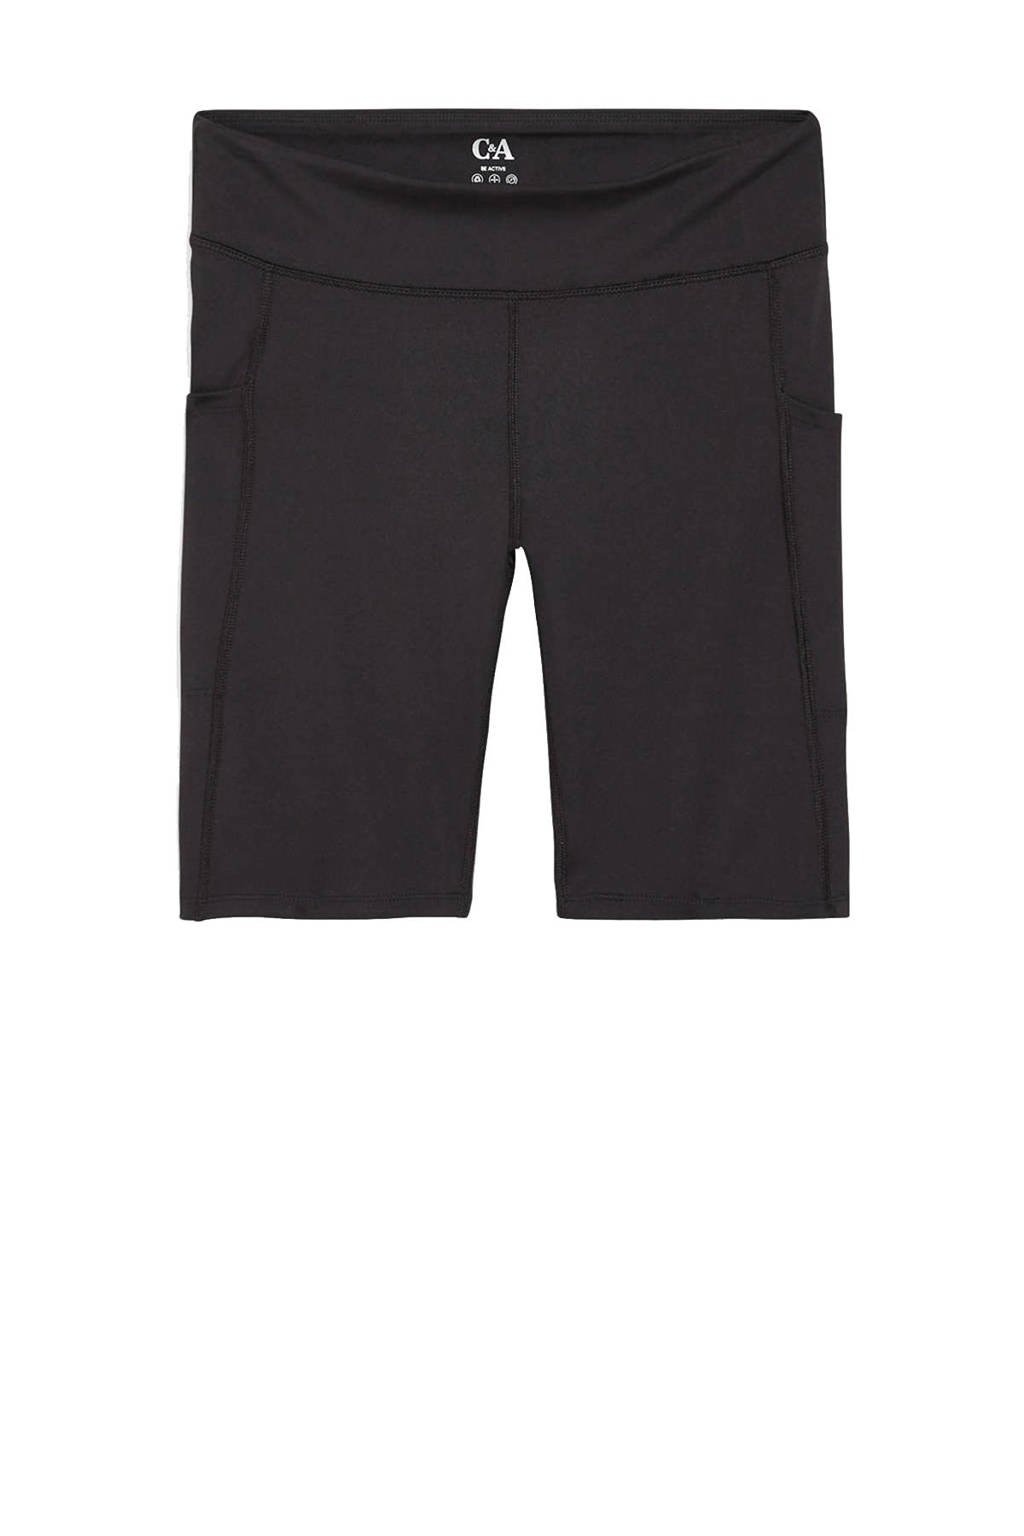 Zwarte dames C&A sportshort van polyester met slim fit, regular waist en elastische tailleband